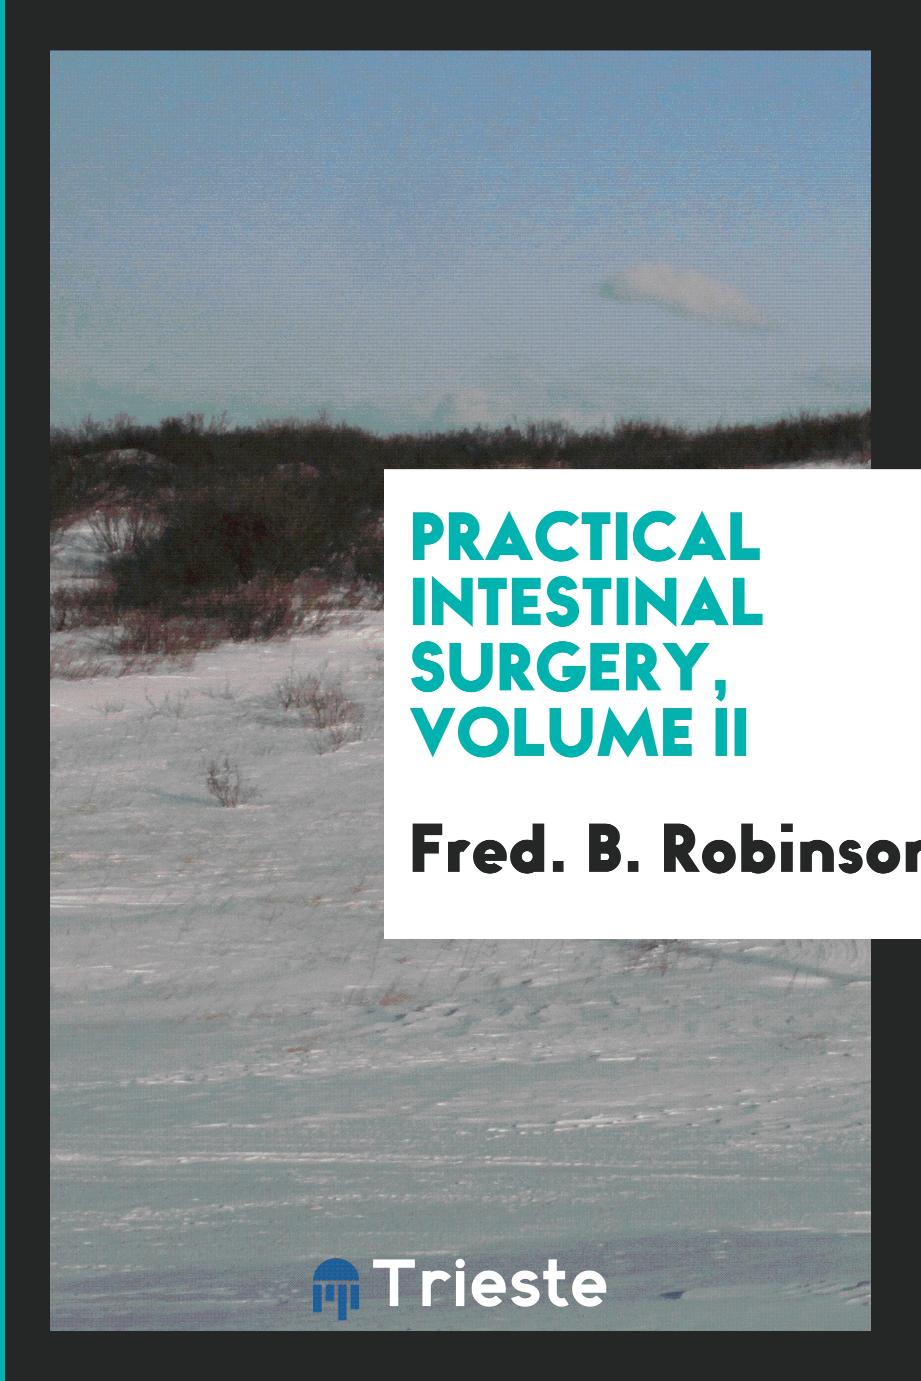 Fred. B. Robinson - Practical Intestinal Surgery, Volume II